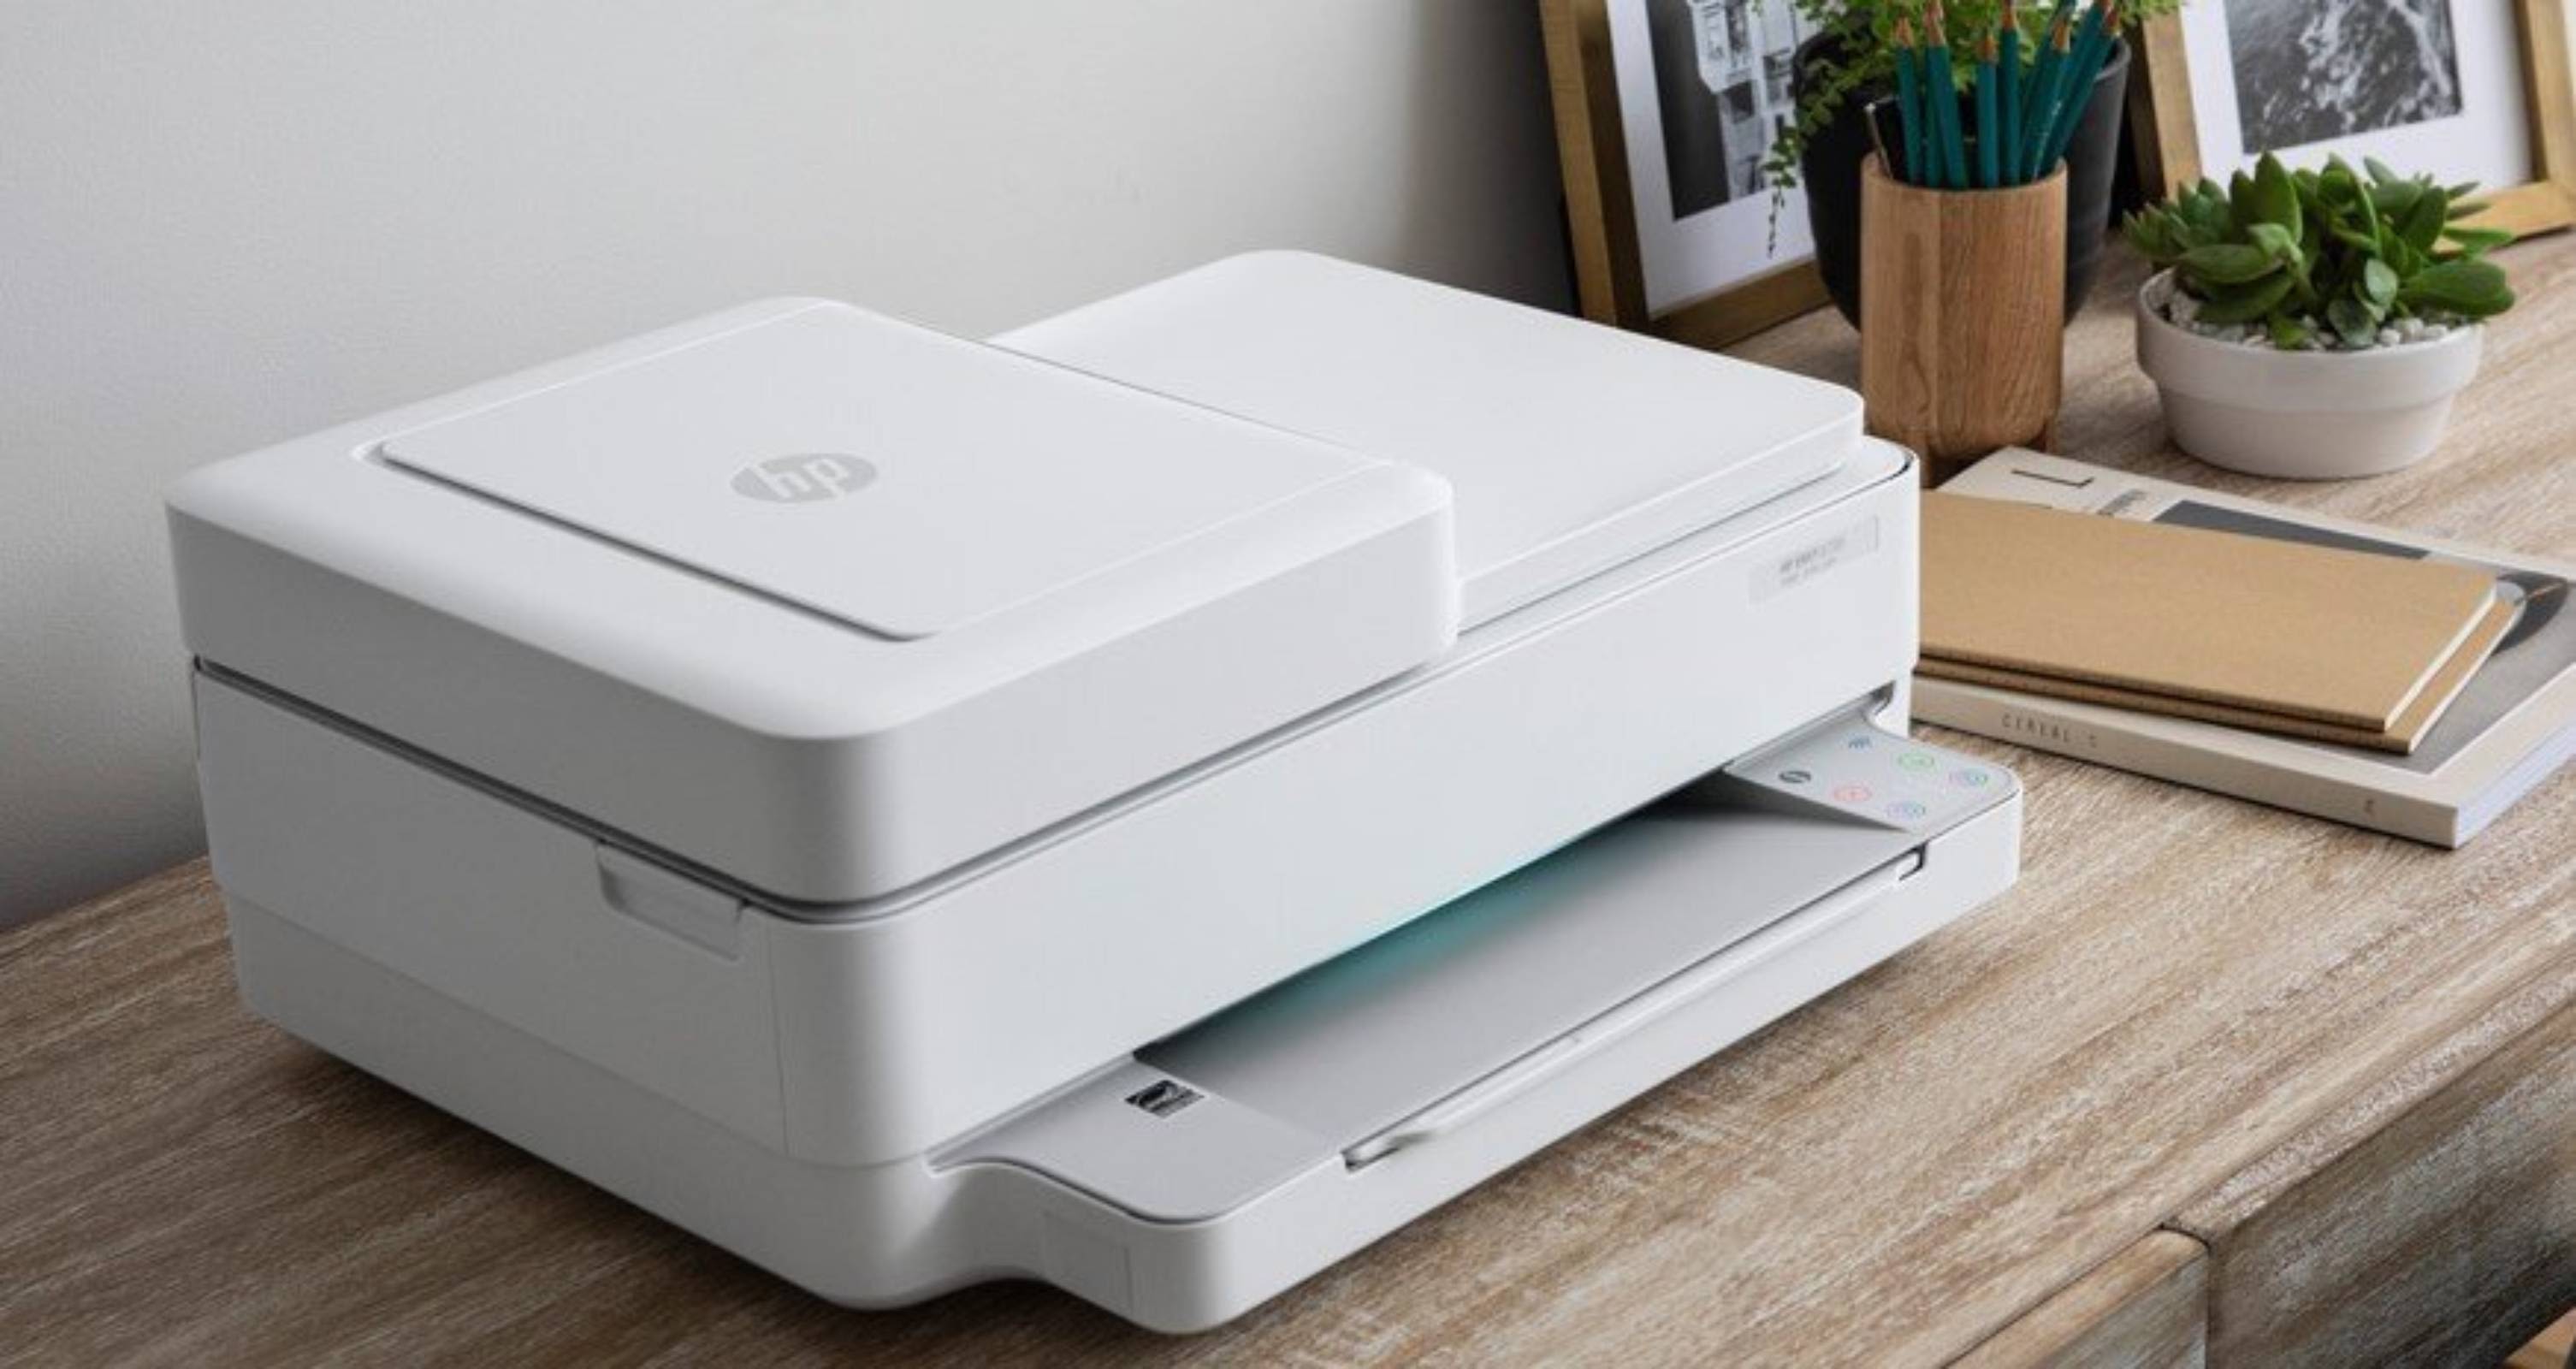 The best printer 2023 | CNN Underscored